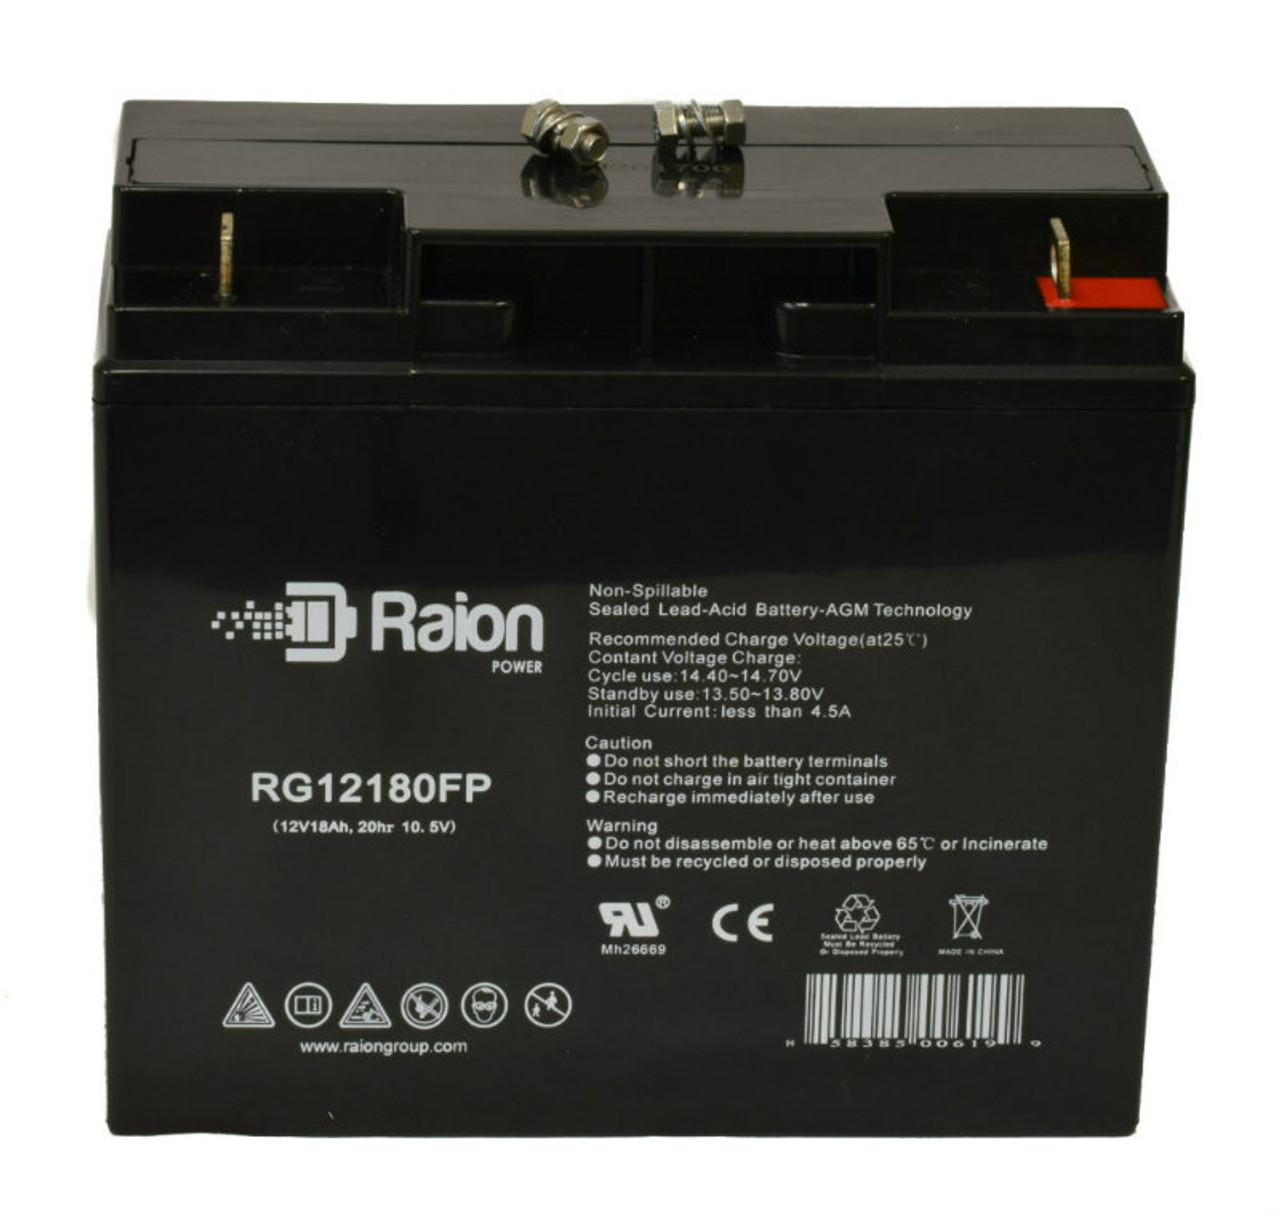 Raion Power RG12180FP 12V 18Ah Lead Acid Battery for Yuntong YT-12180